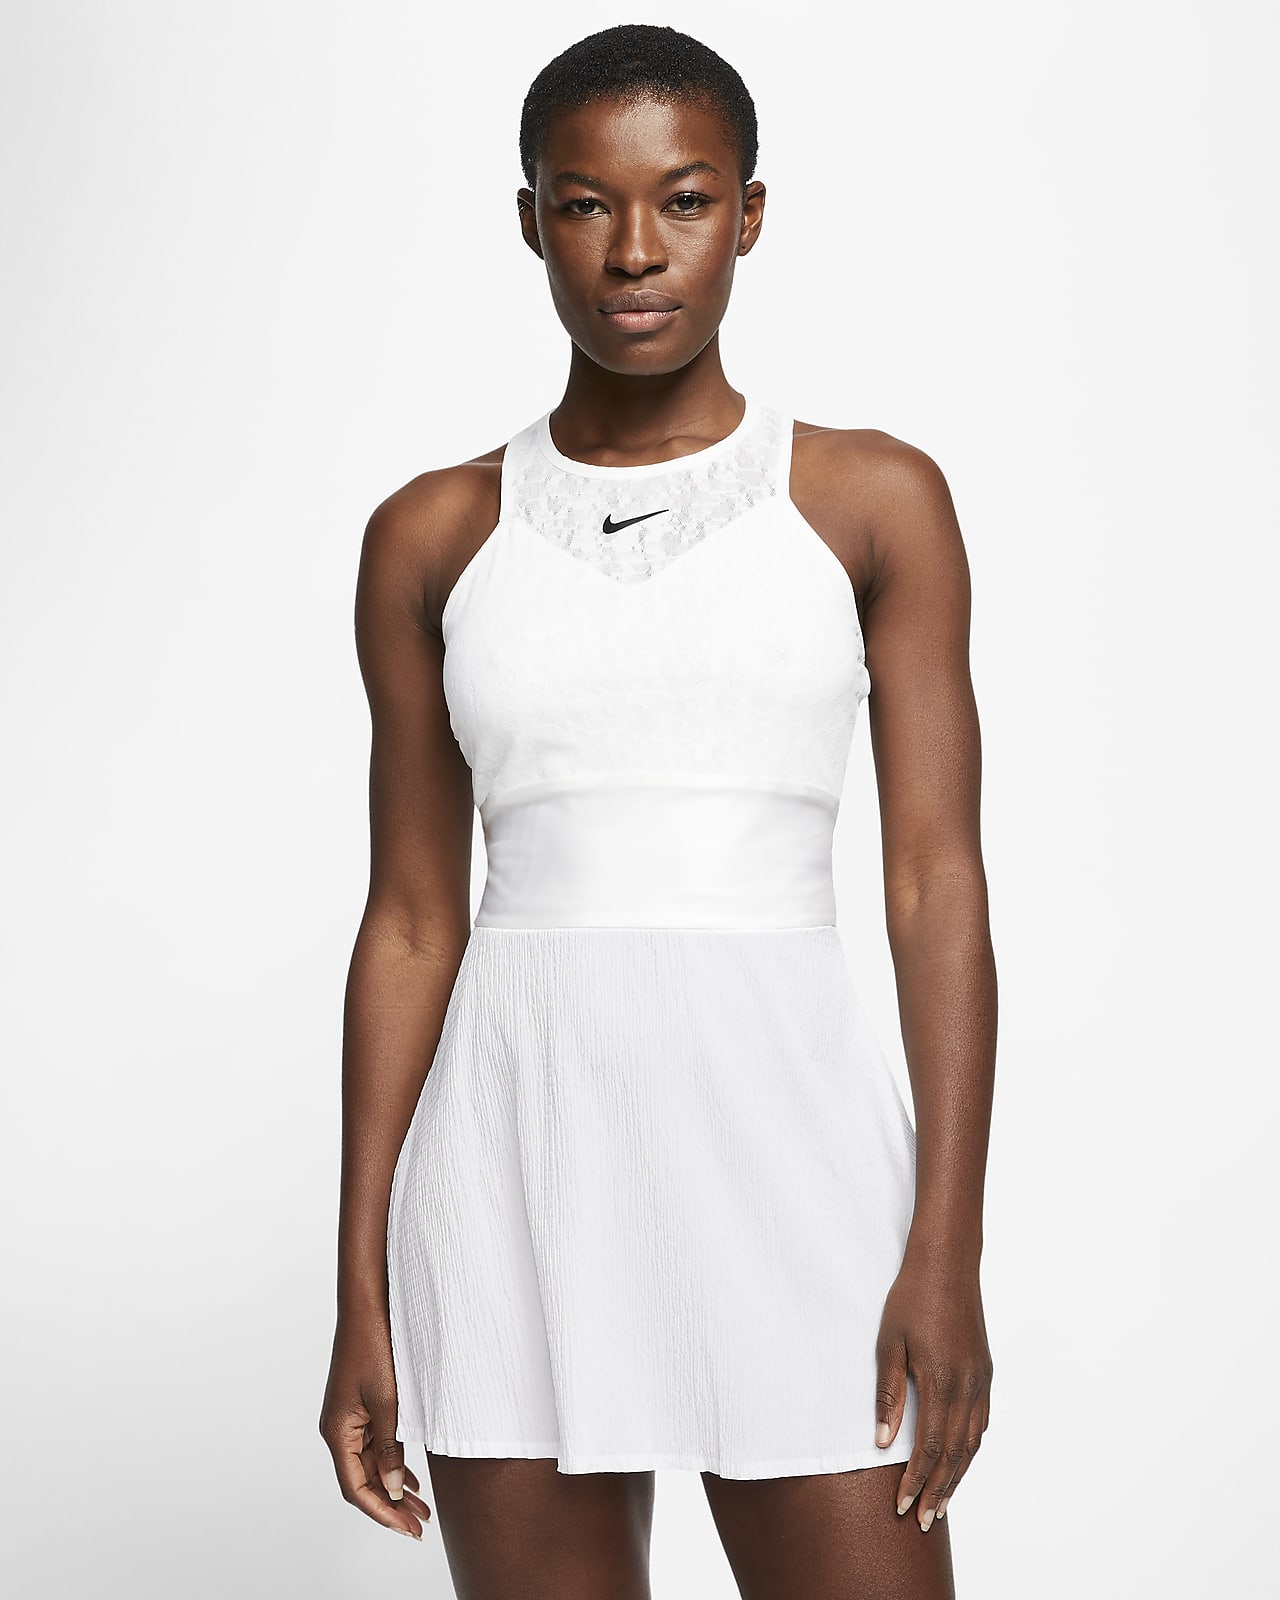 Maria Women's Tennis Dress. Nike GB